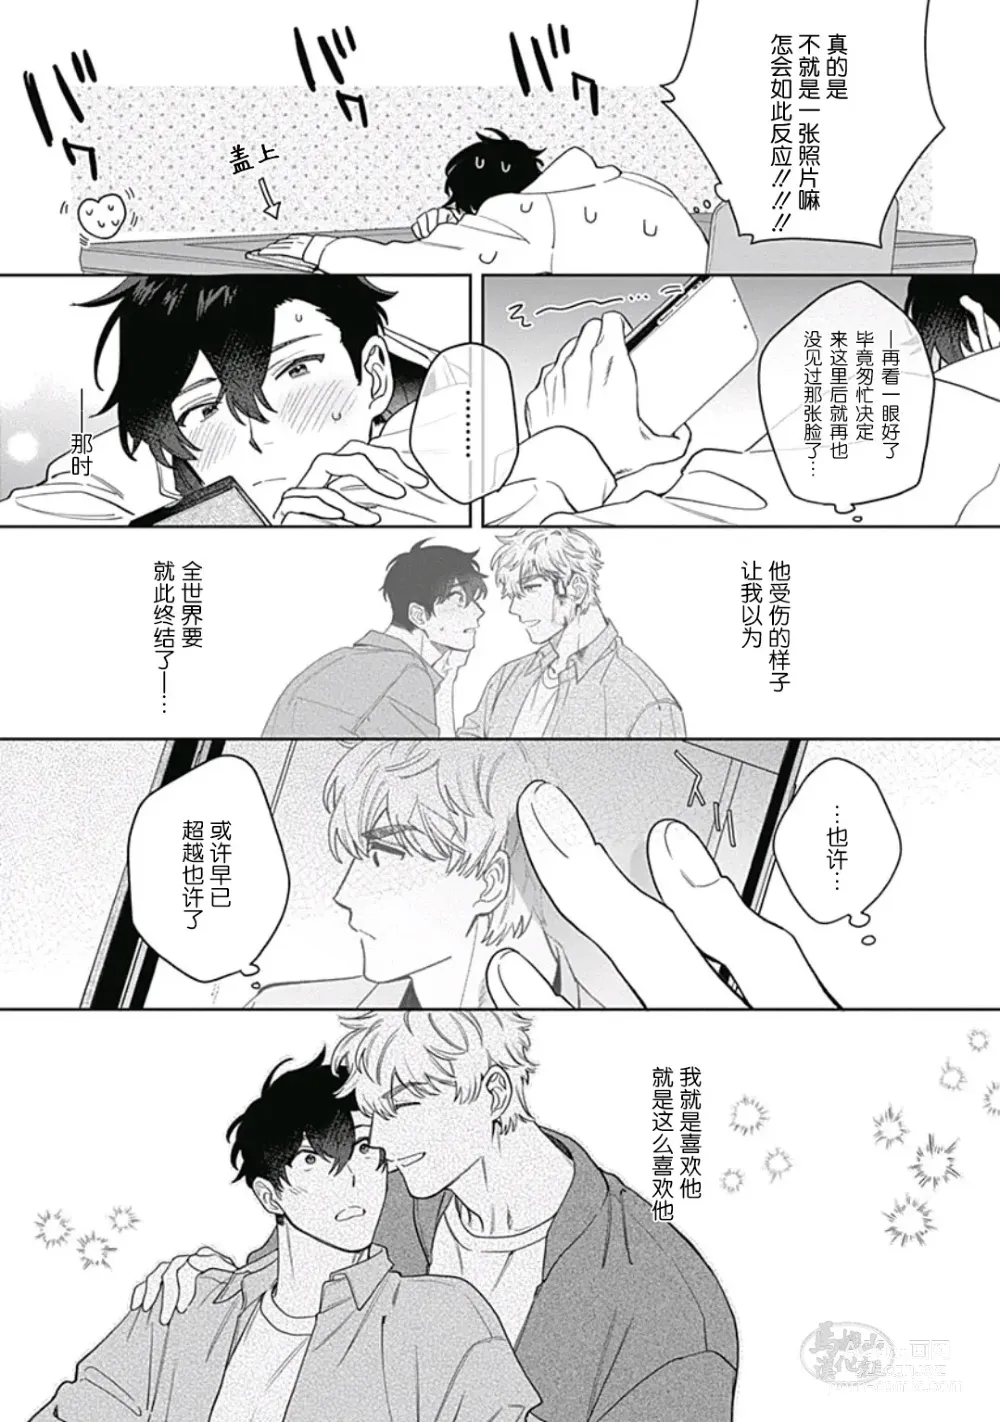 Page 7 of manga 想要守护你 佐渡前辈 5